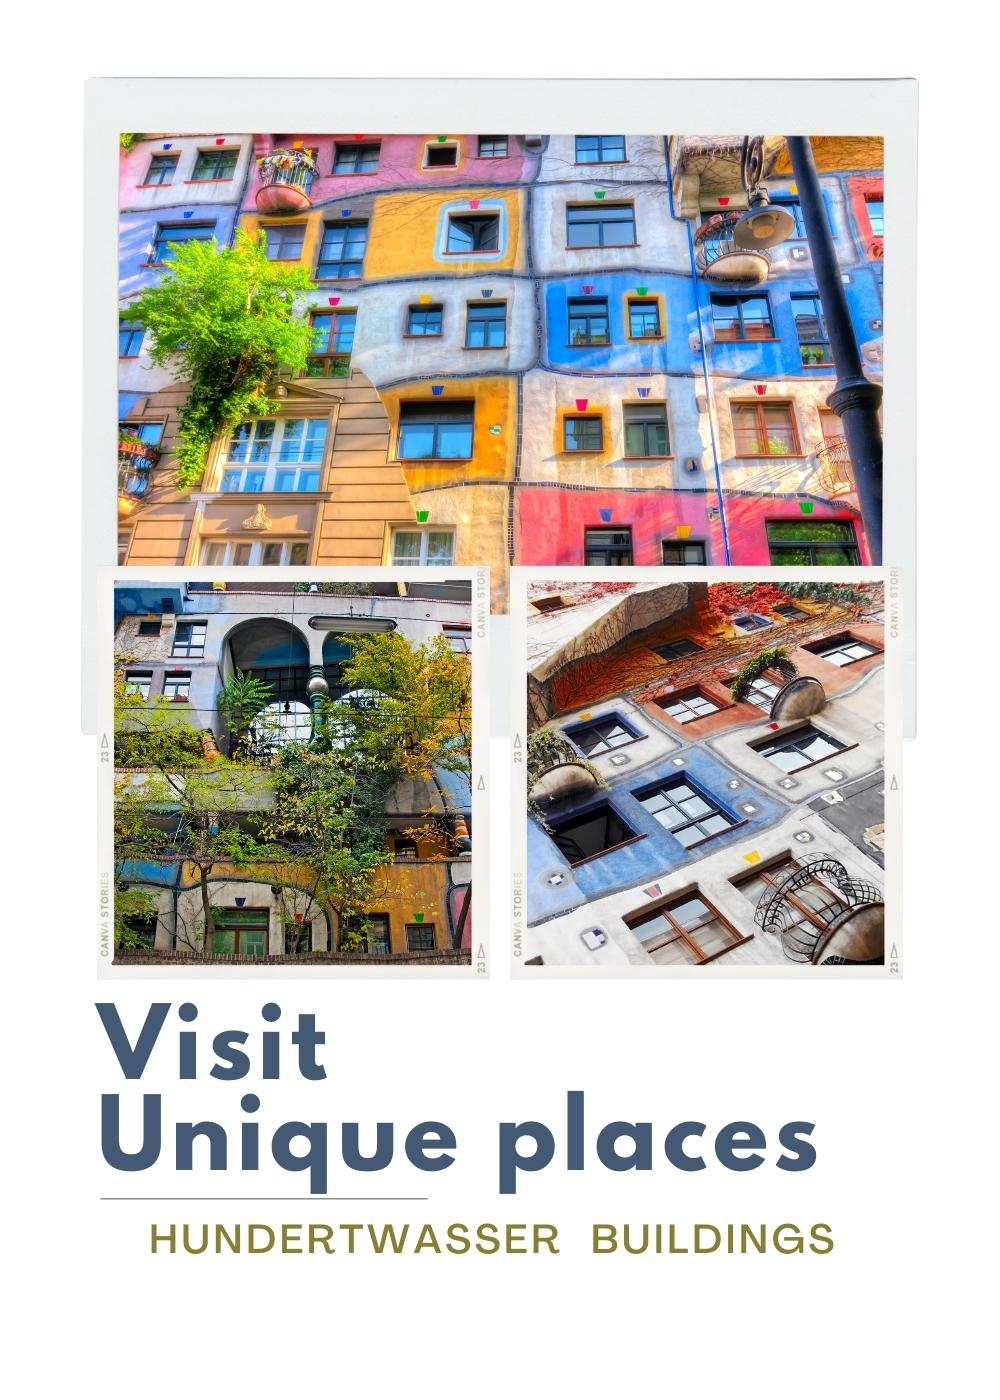 Hundertwasser buildings Unique places to visit where to find them